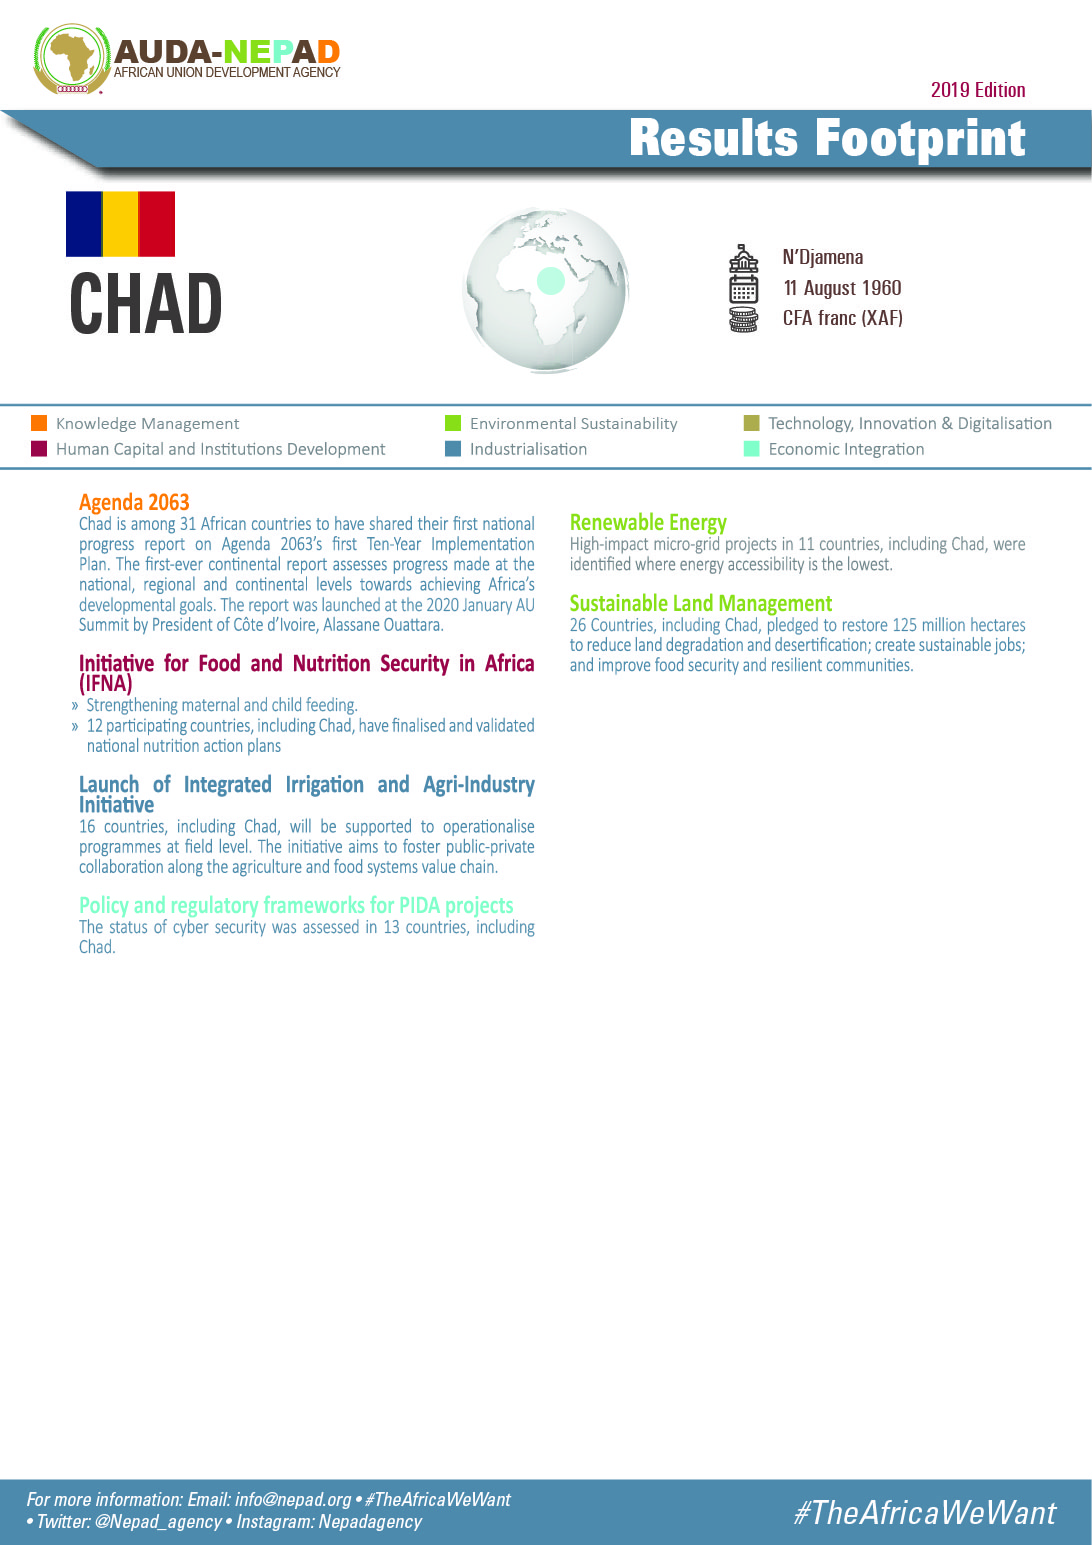 2019 AUDA-NEPAD Footprint: Country Profiles: Chad